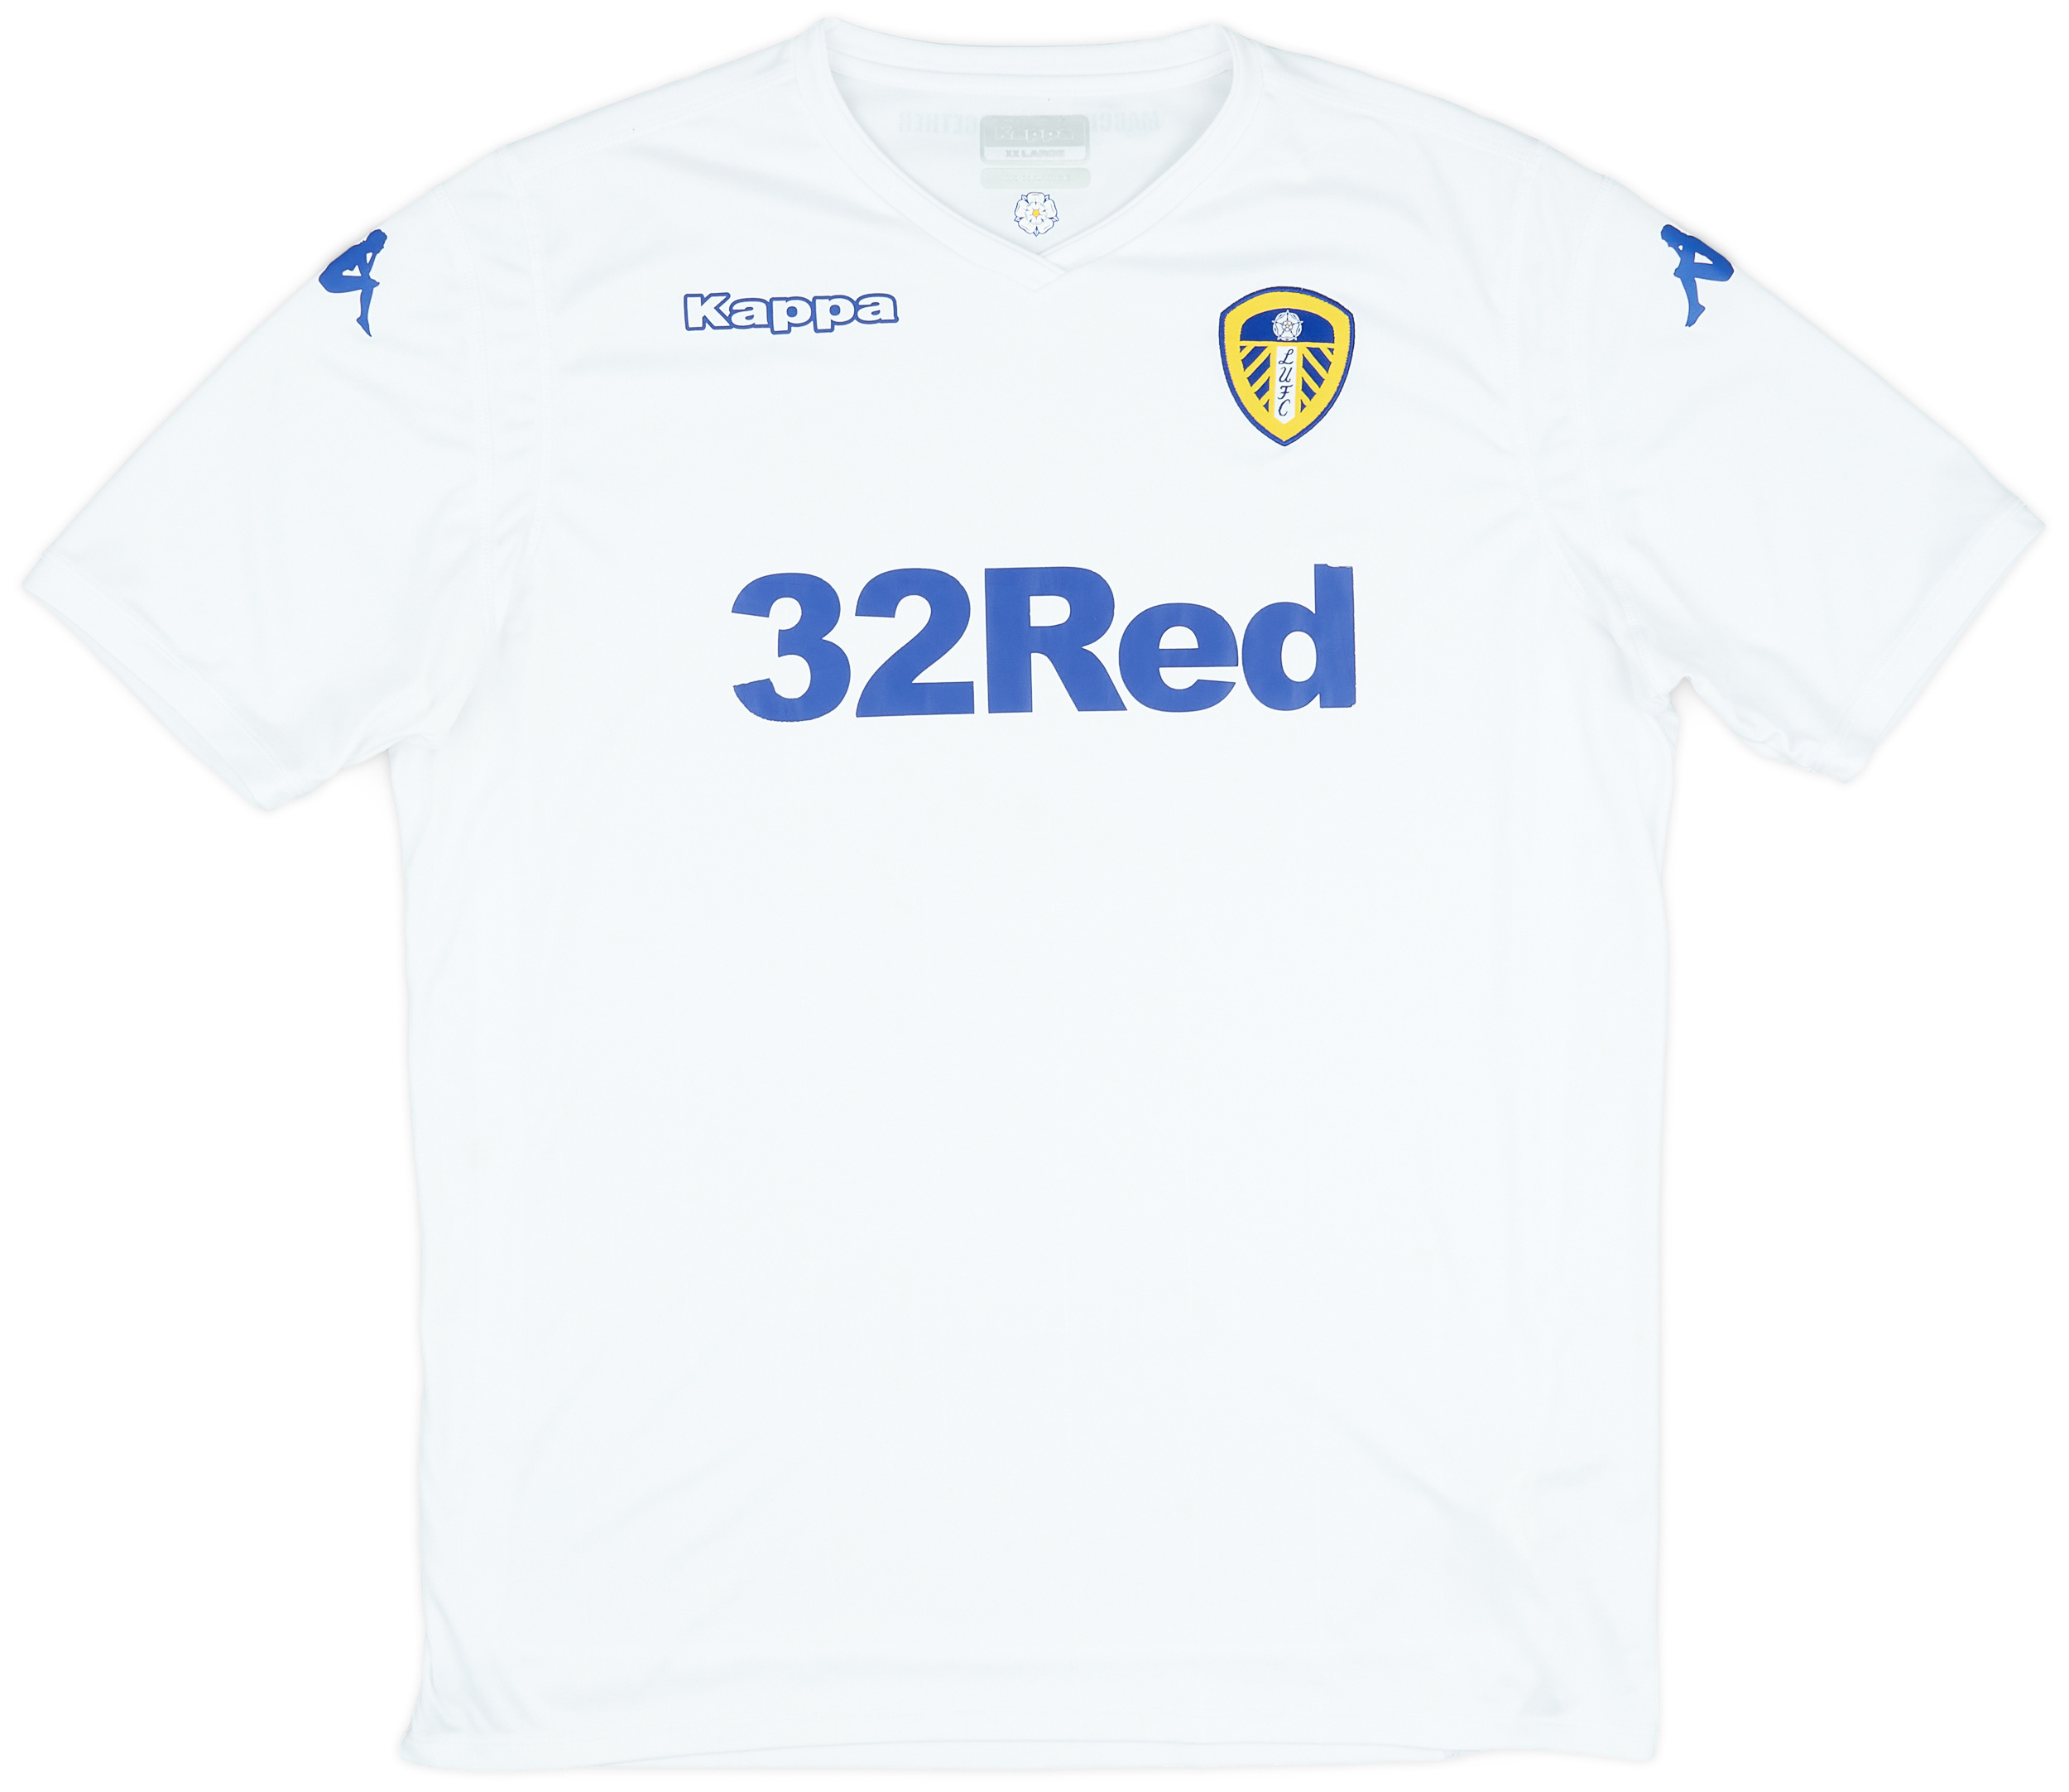 2018-19 Leeds United Home Shirt - 9/10 - ()